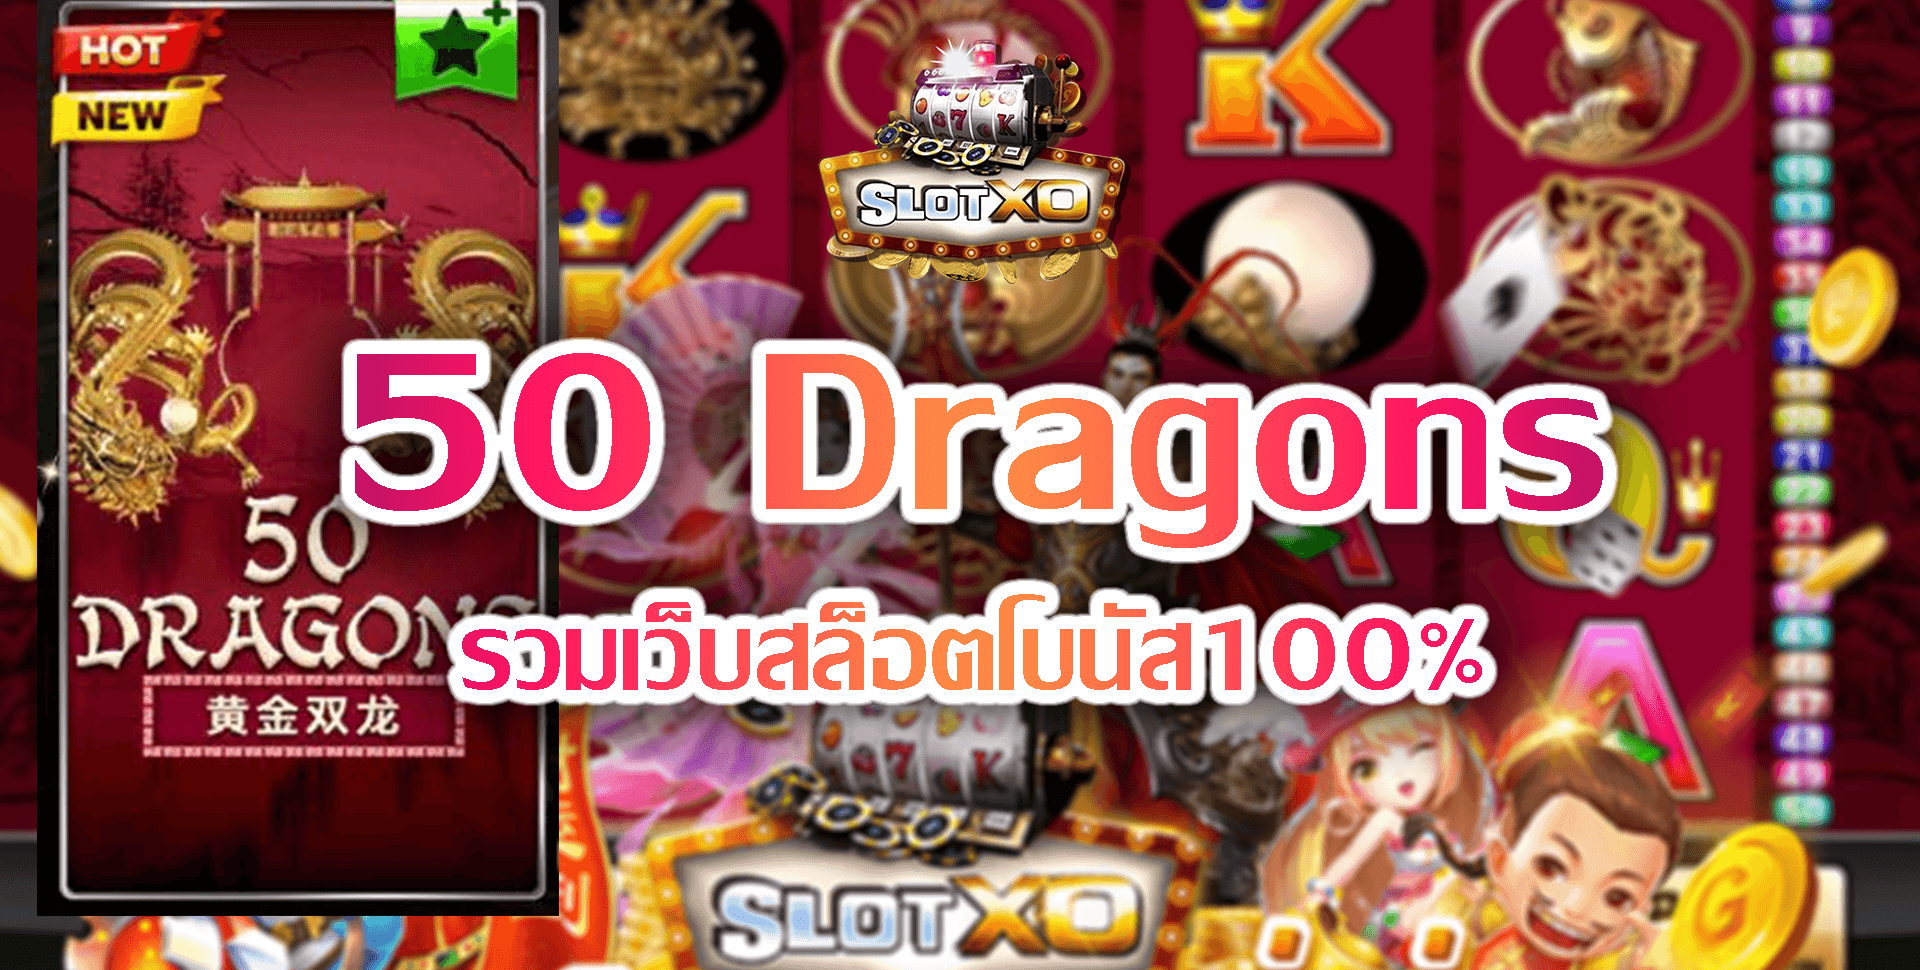 Slotxo-Slot xo-50-Dragons-5